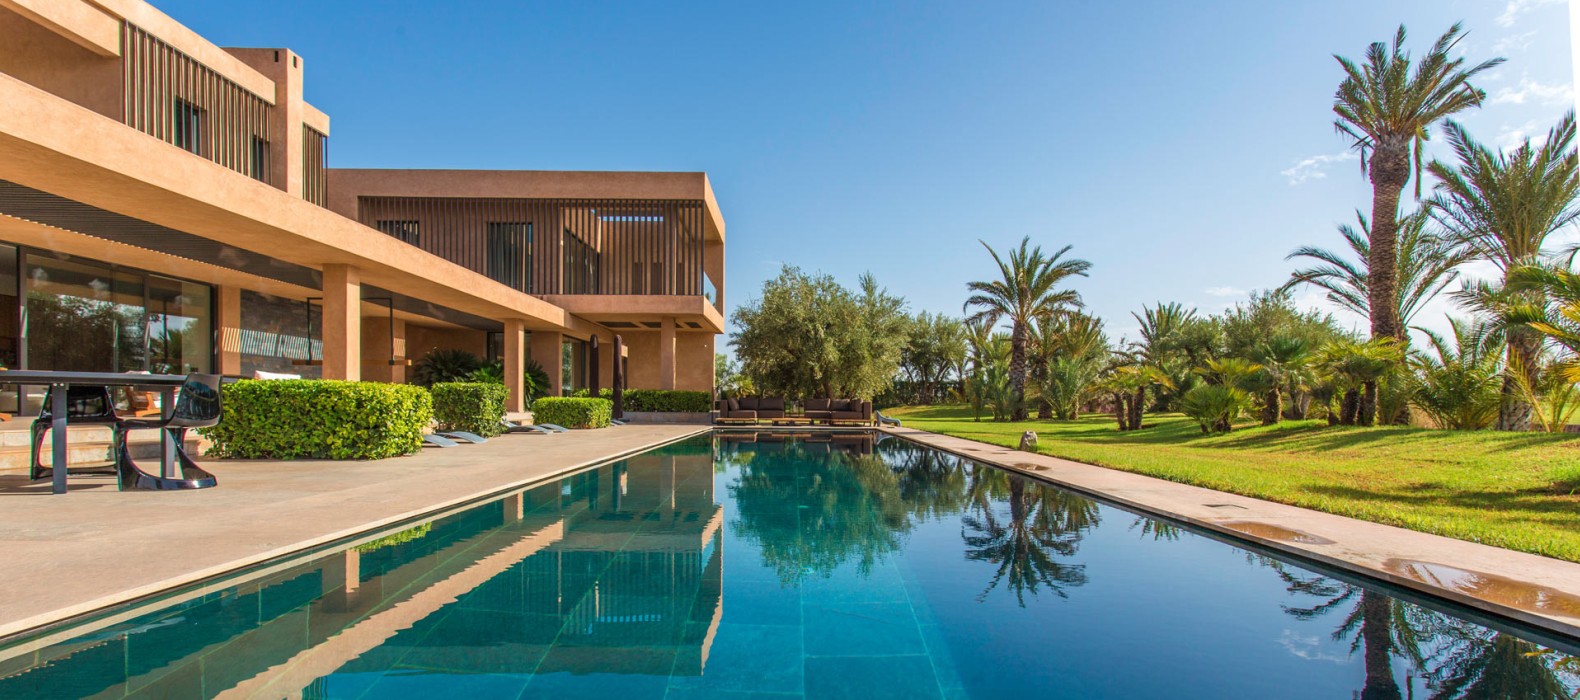 Pool view of Villa Golf Saharien in Marrakech